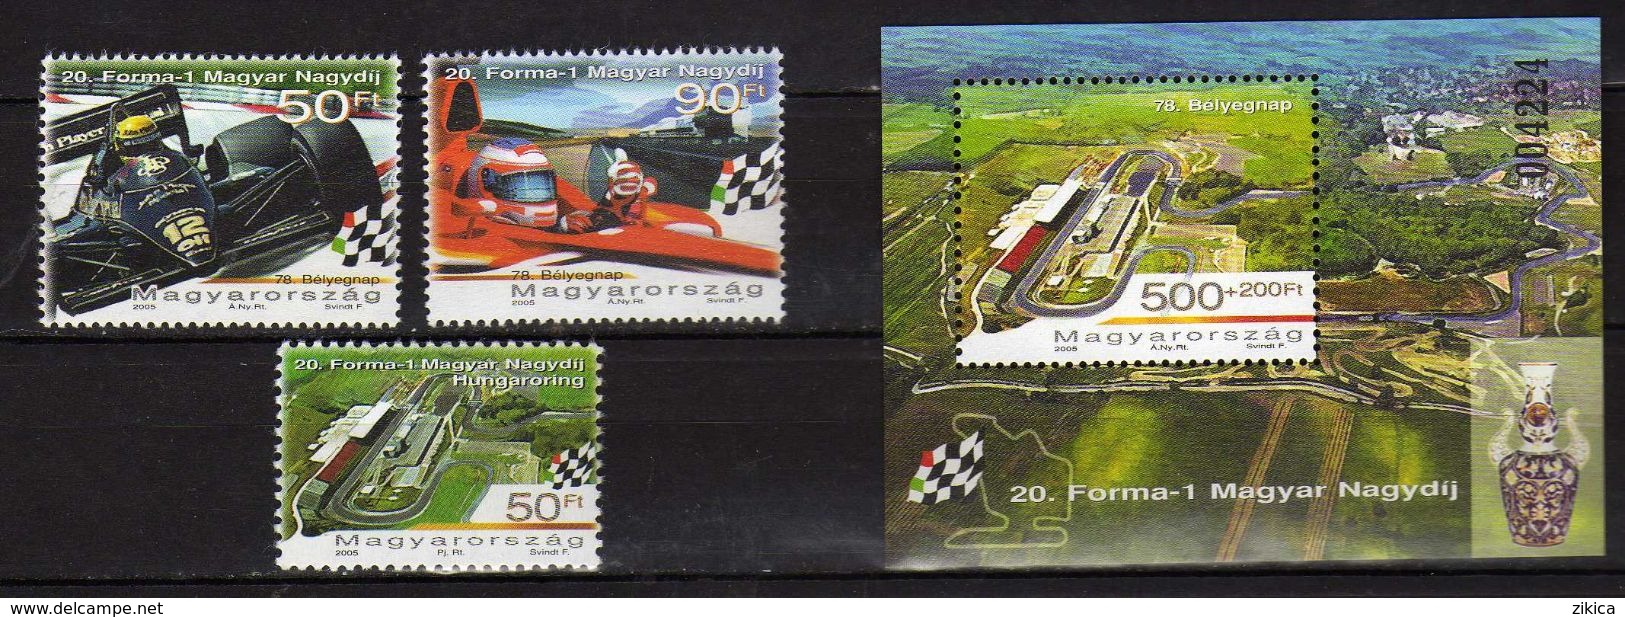 HUNGARY 2005 Stamp Day - Formula 1 Grand Prix Of Hungary And Hungaroring. Car Racing. MNH - Ungebraucht